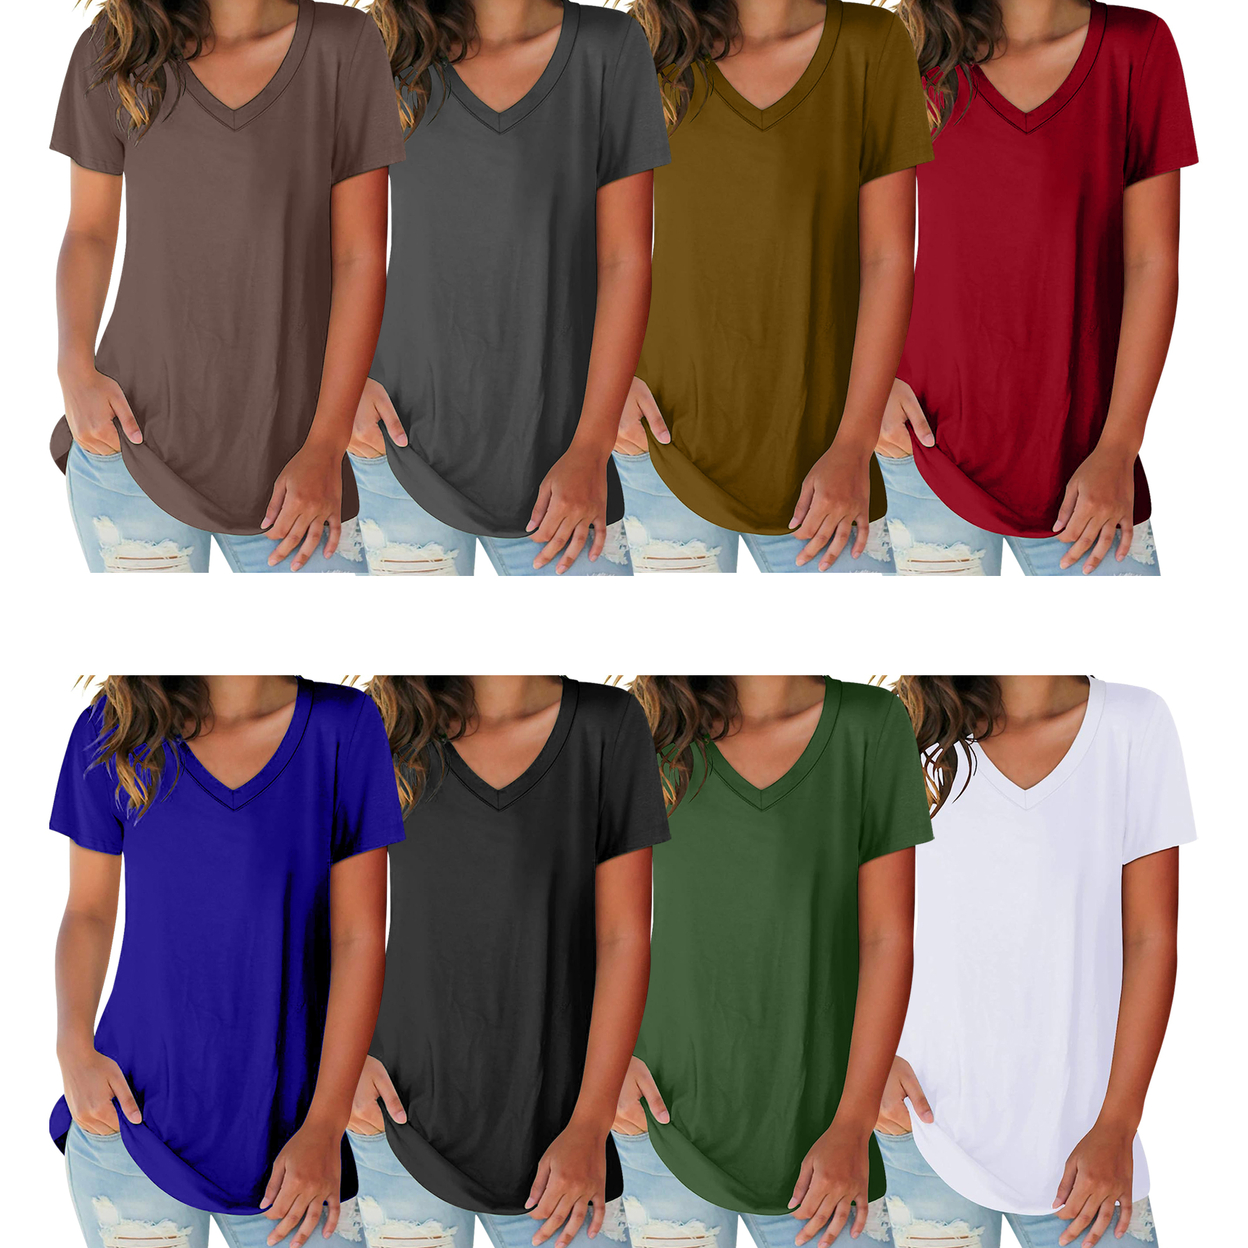 4-Pack: Women's Ultra Soft Smooth Cotton Blend Basic V-Neck Short Sleeve Shirts - Small